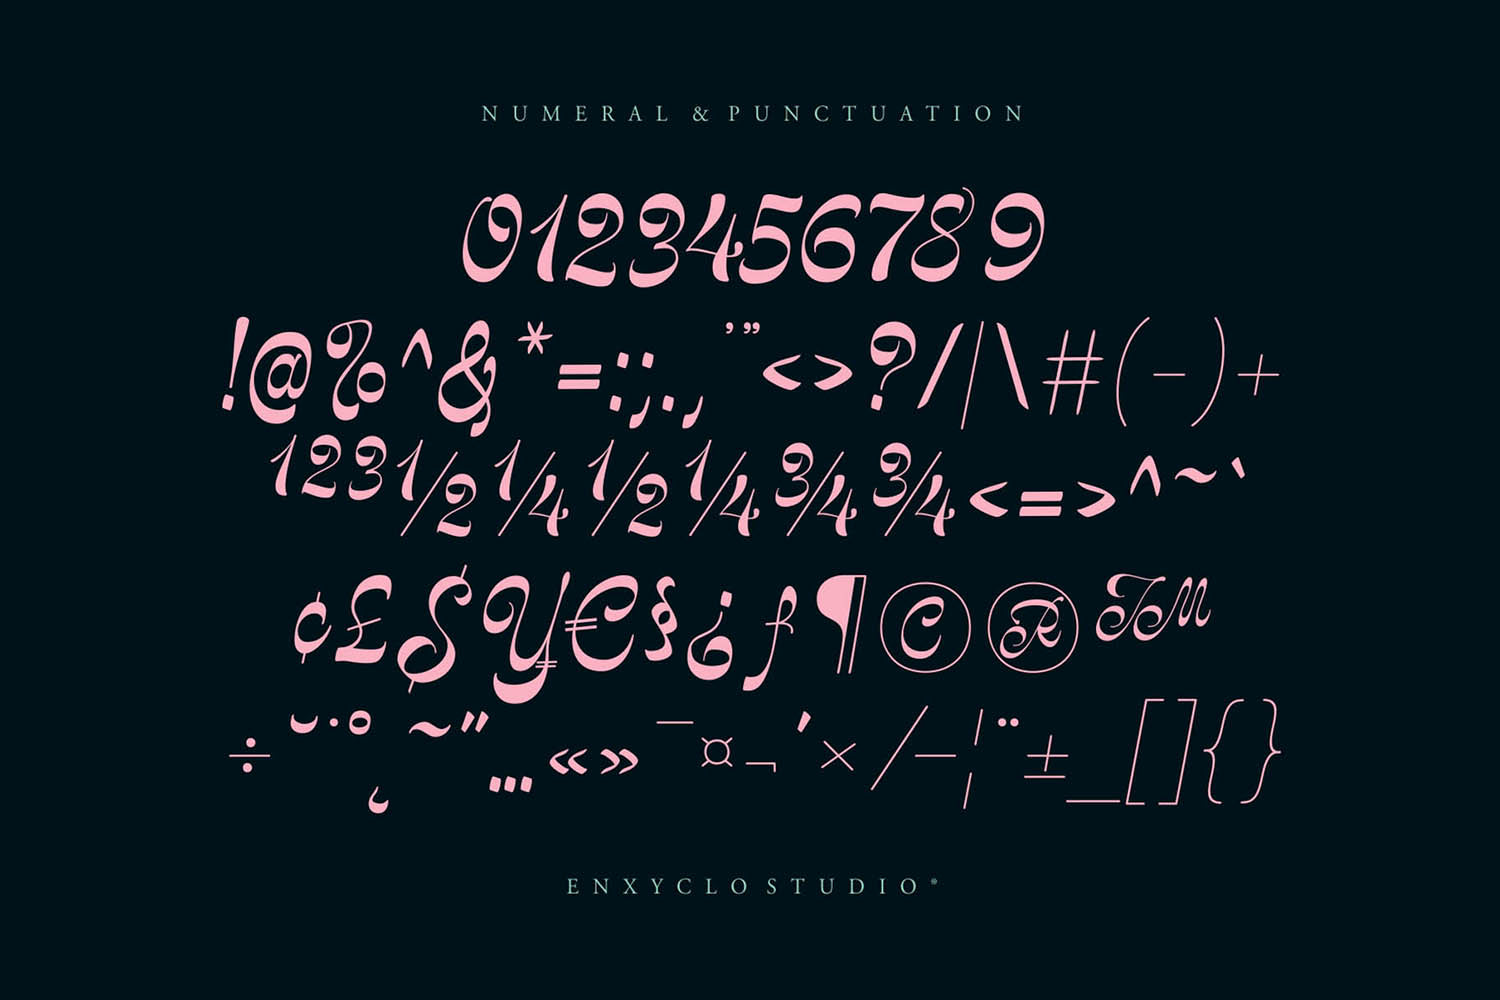 NCL Kisgade - Modern Script Font